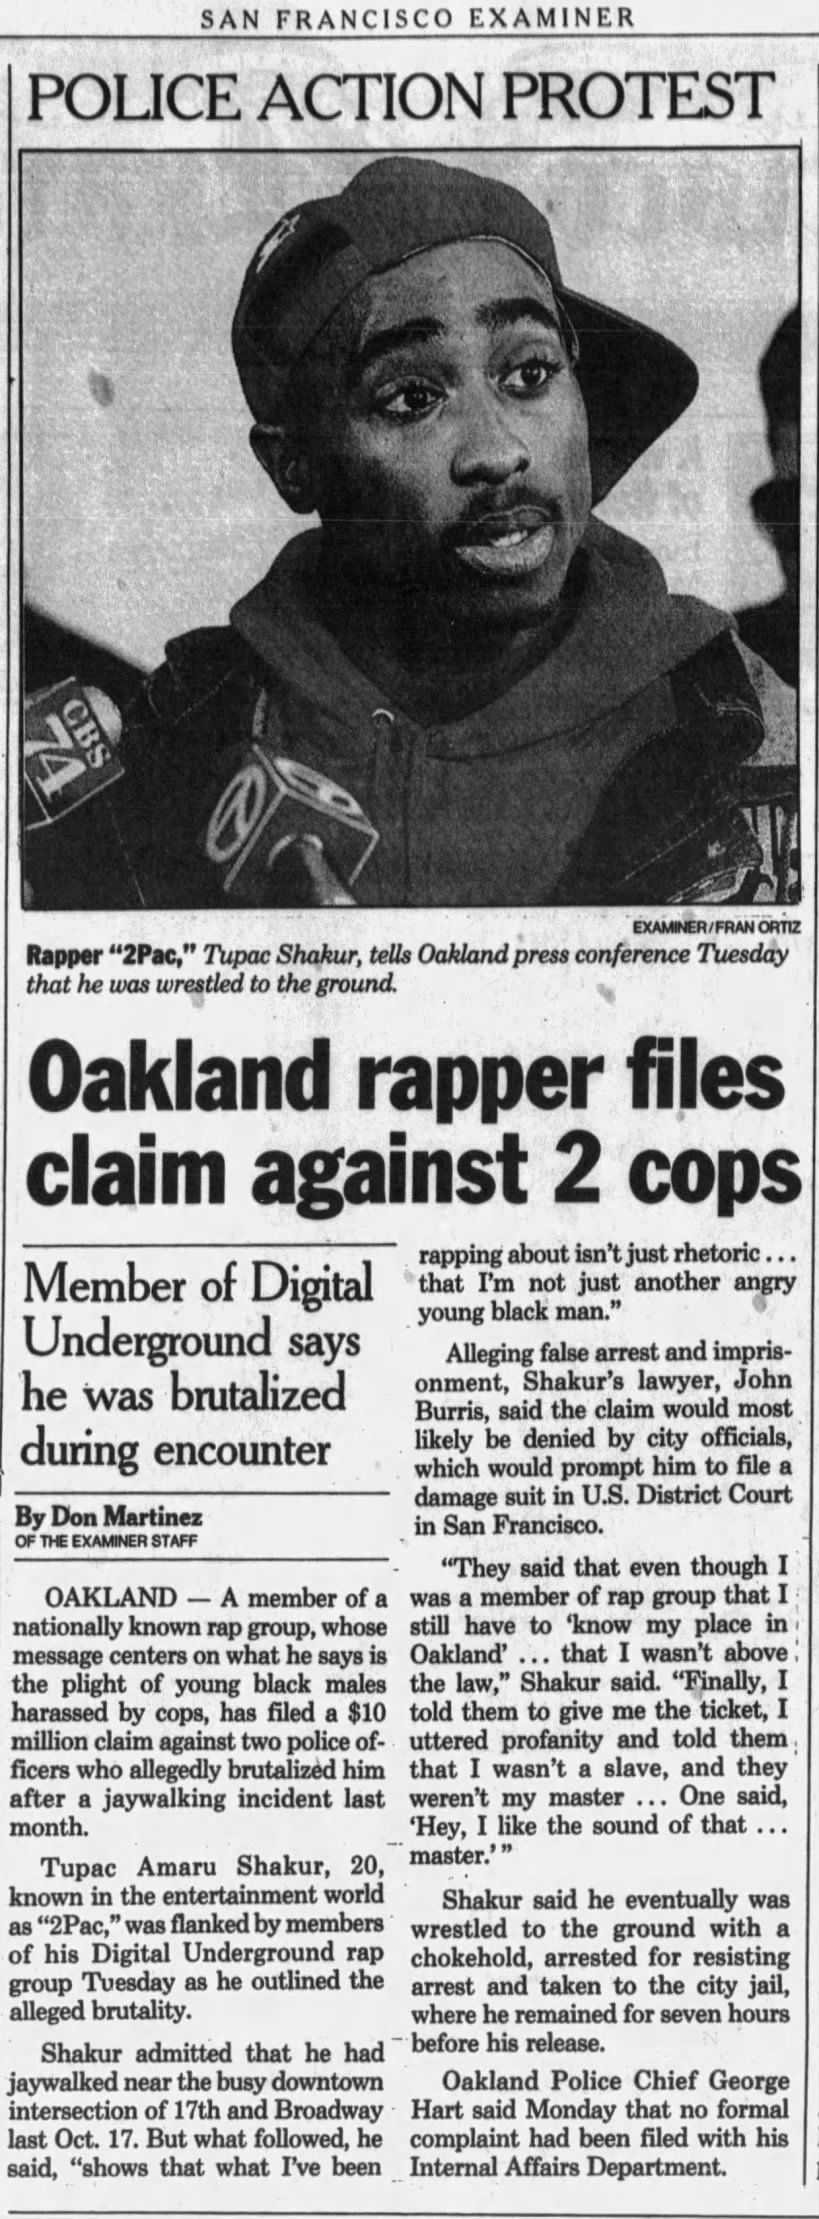 Tupac Shakur Files Lawsuit Against Oakland Police